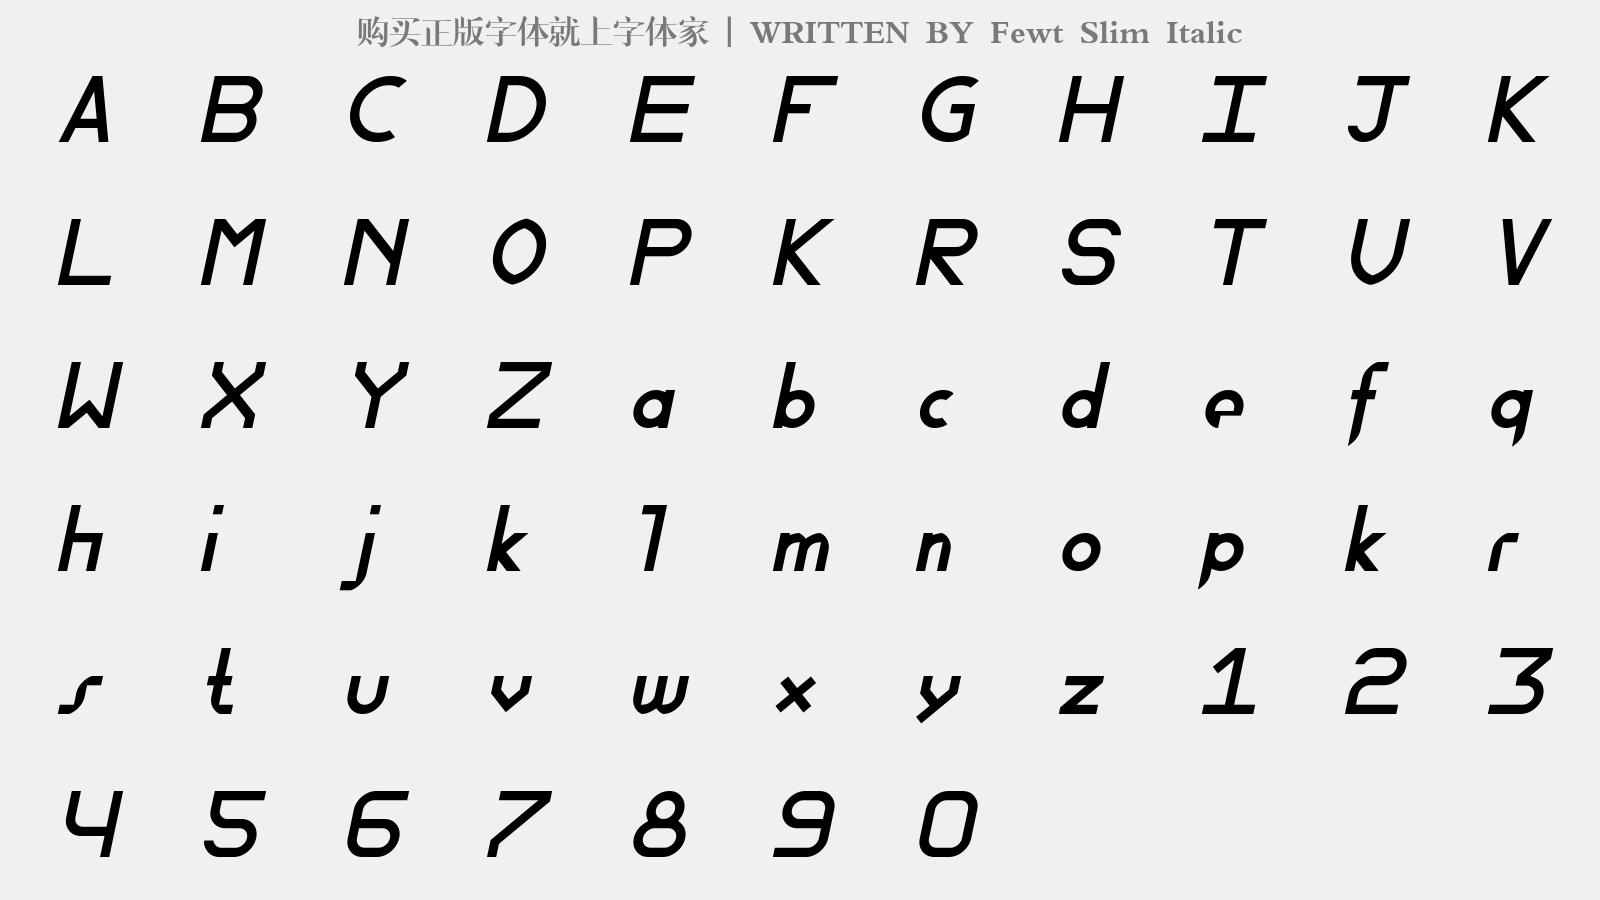 Fewt Slim Italic - 大写字母/小写字母/数字